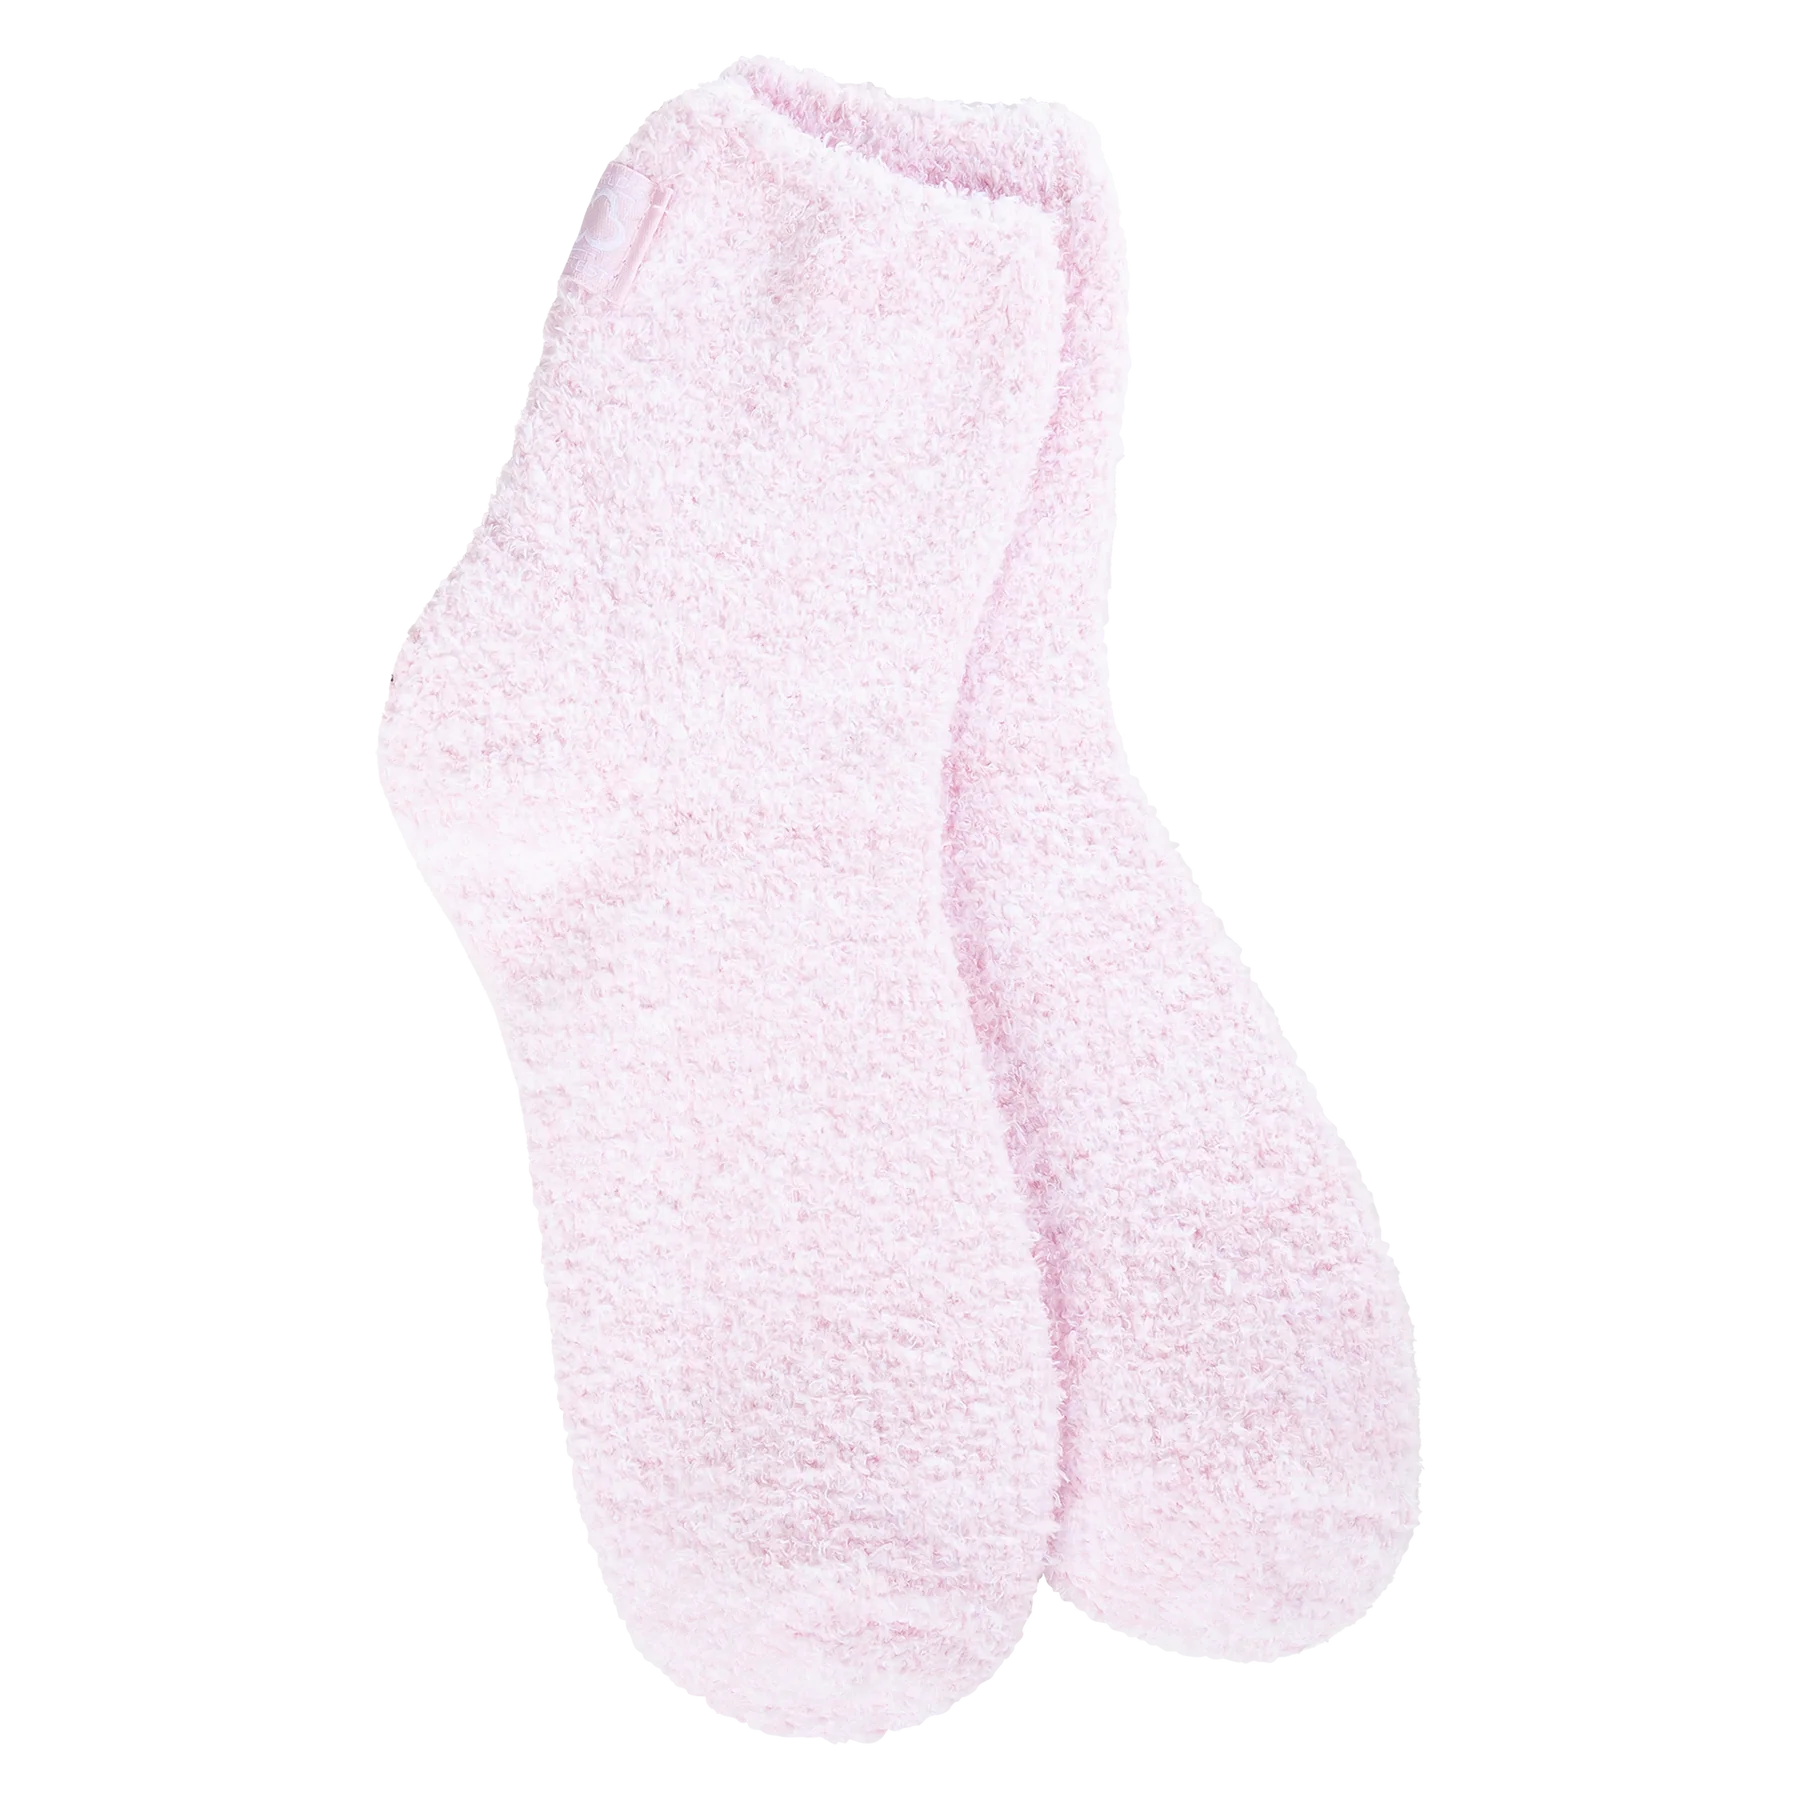 Cozy Quarter Socks